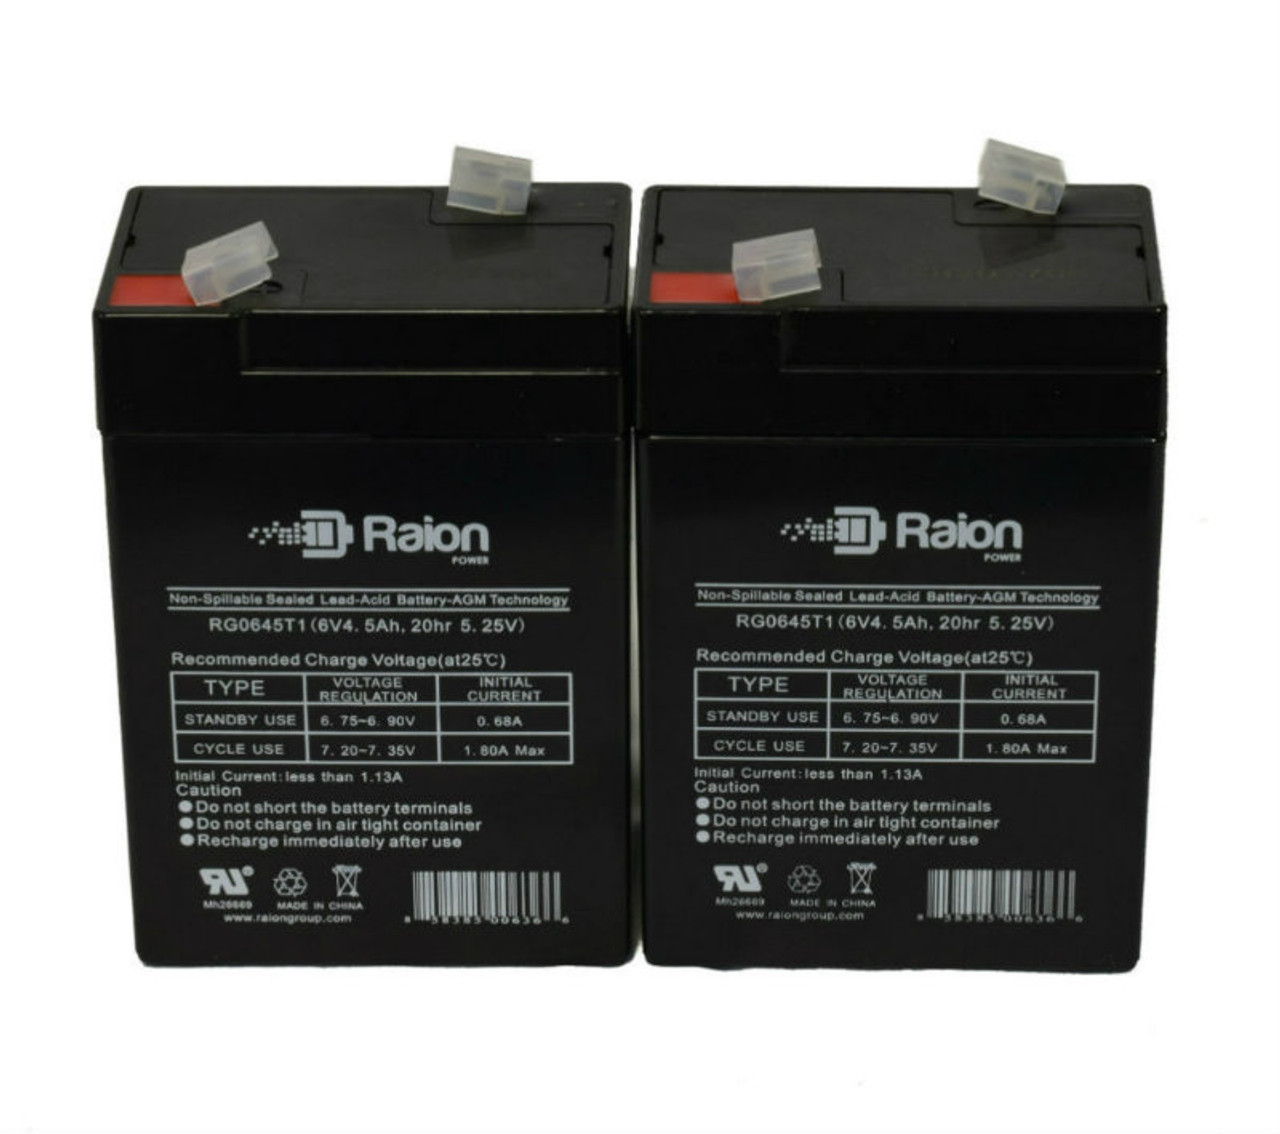 Raion Power 6 Volt 4.5Ah RG0645T1 Replacement Battery for Koyosonic NP3.5-6 - 2 Pack